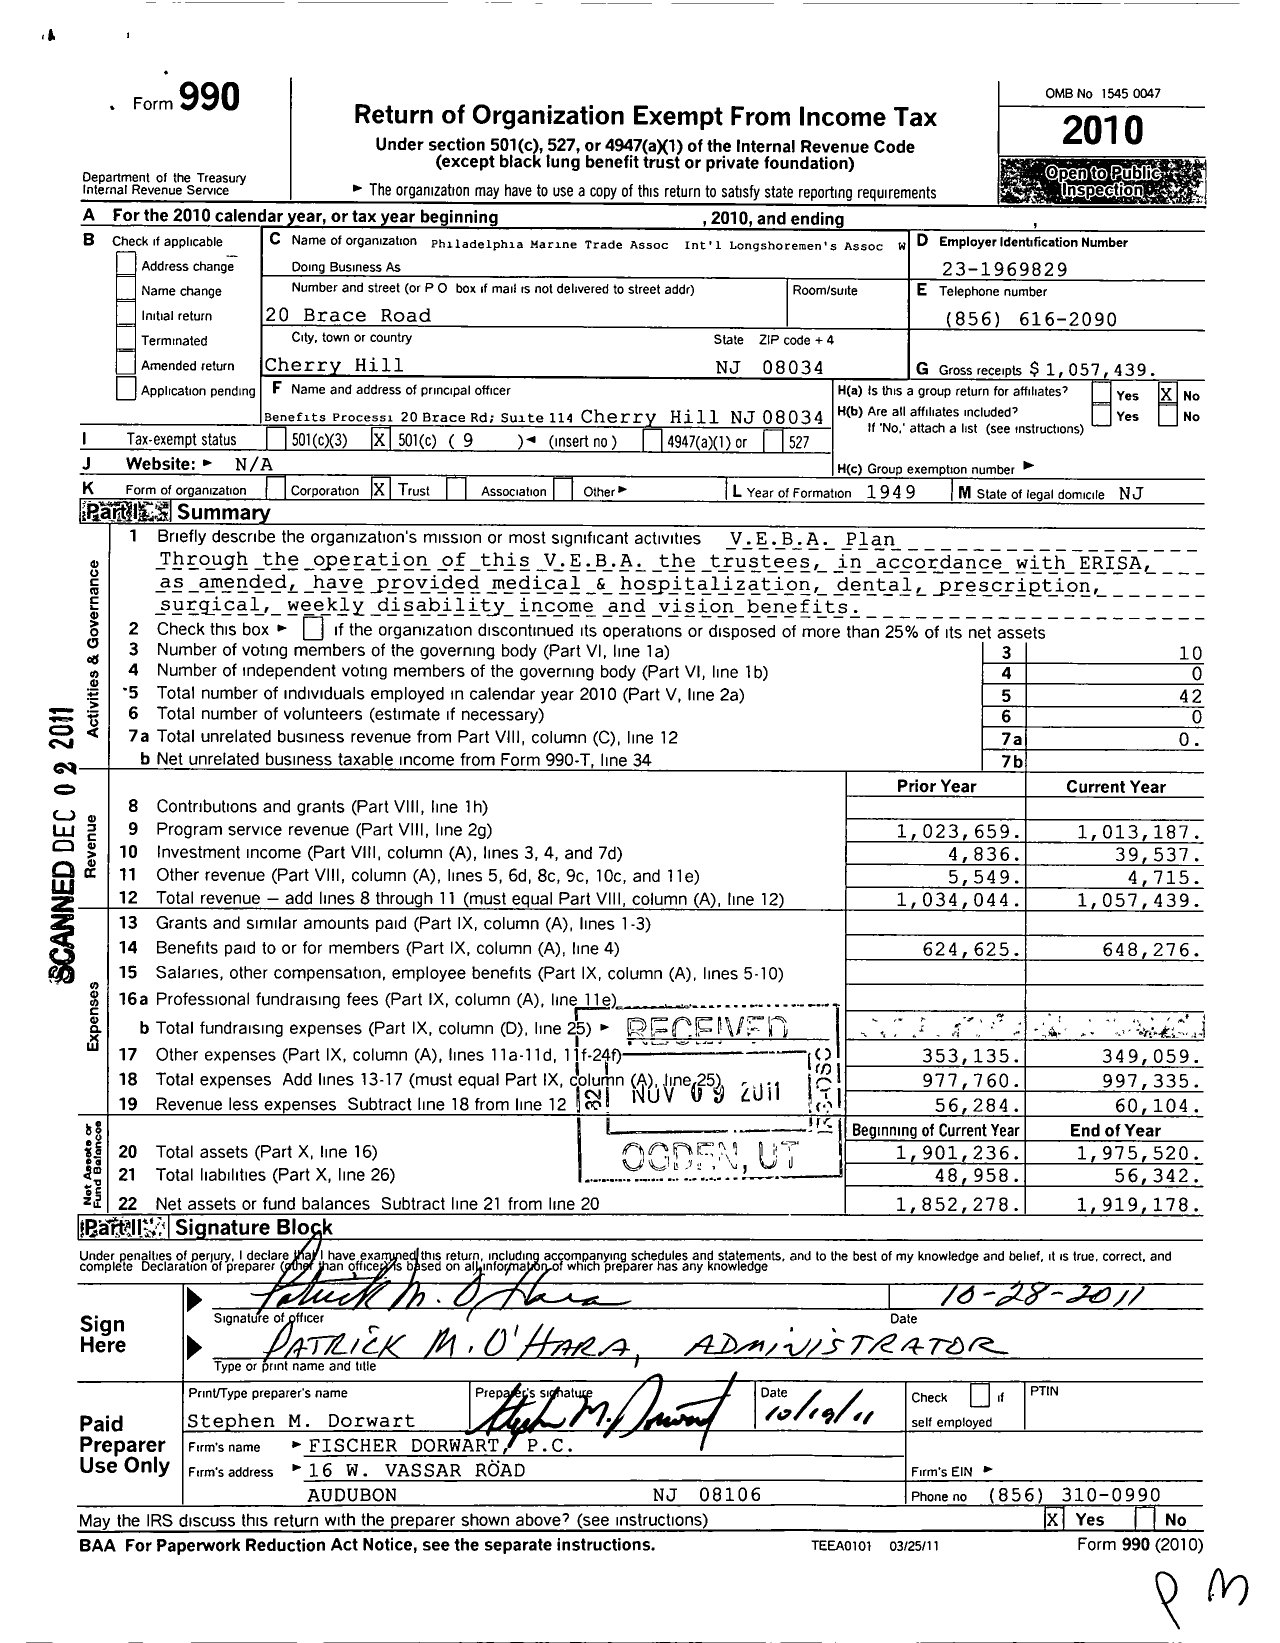 Image of first page of 2010 Form 990O for Philadelphia Marine Trade Association International Longshoremens Association Welfare